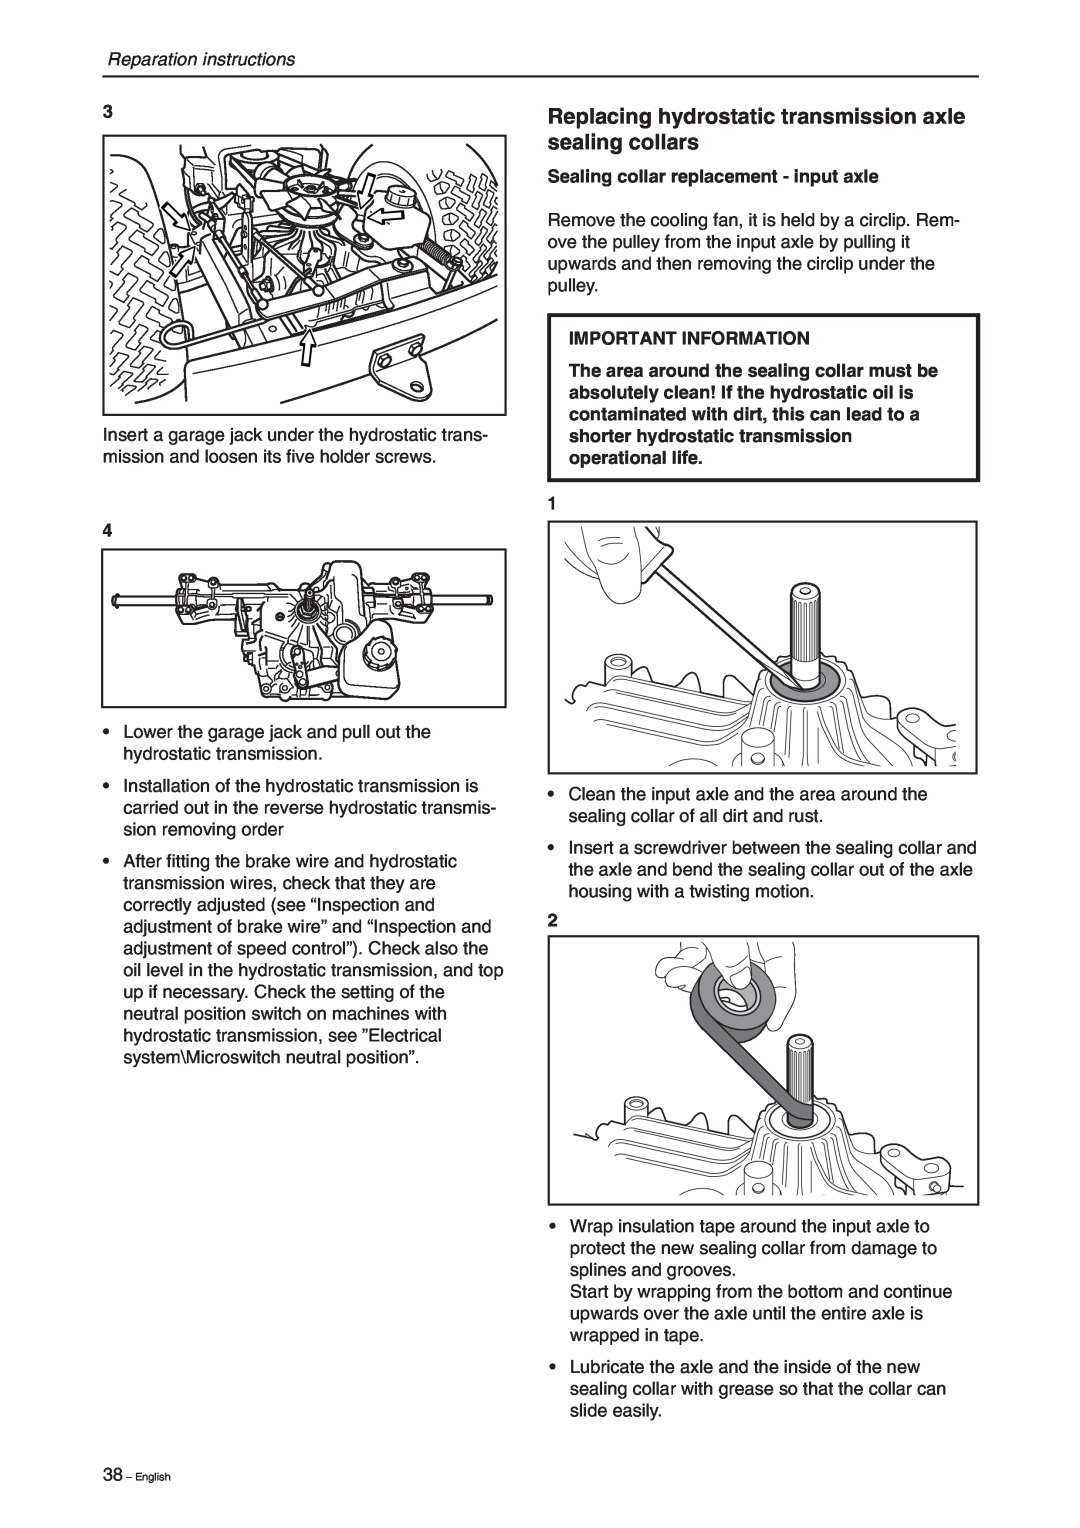 Briggs & Stratton RIDER 11 BIO manual Replacing hydrostatic transmission axle sealing collars, Reparation instructions 